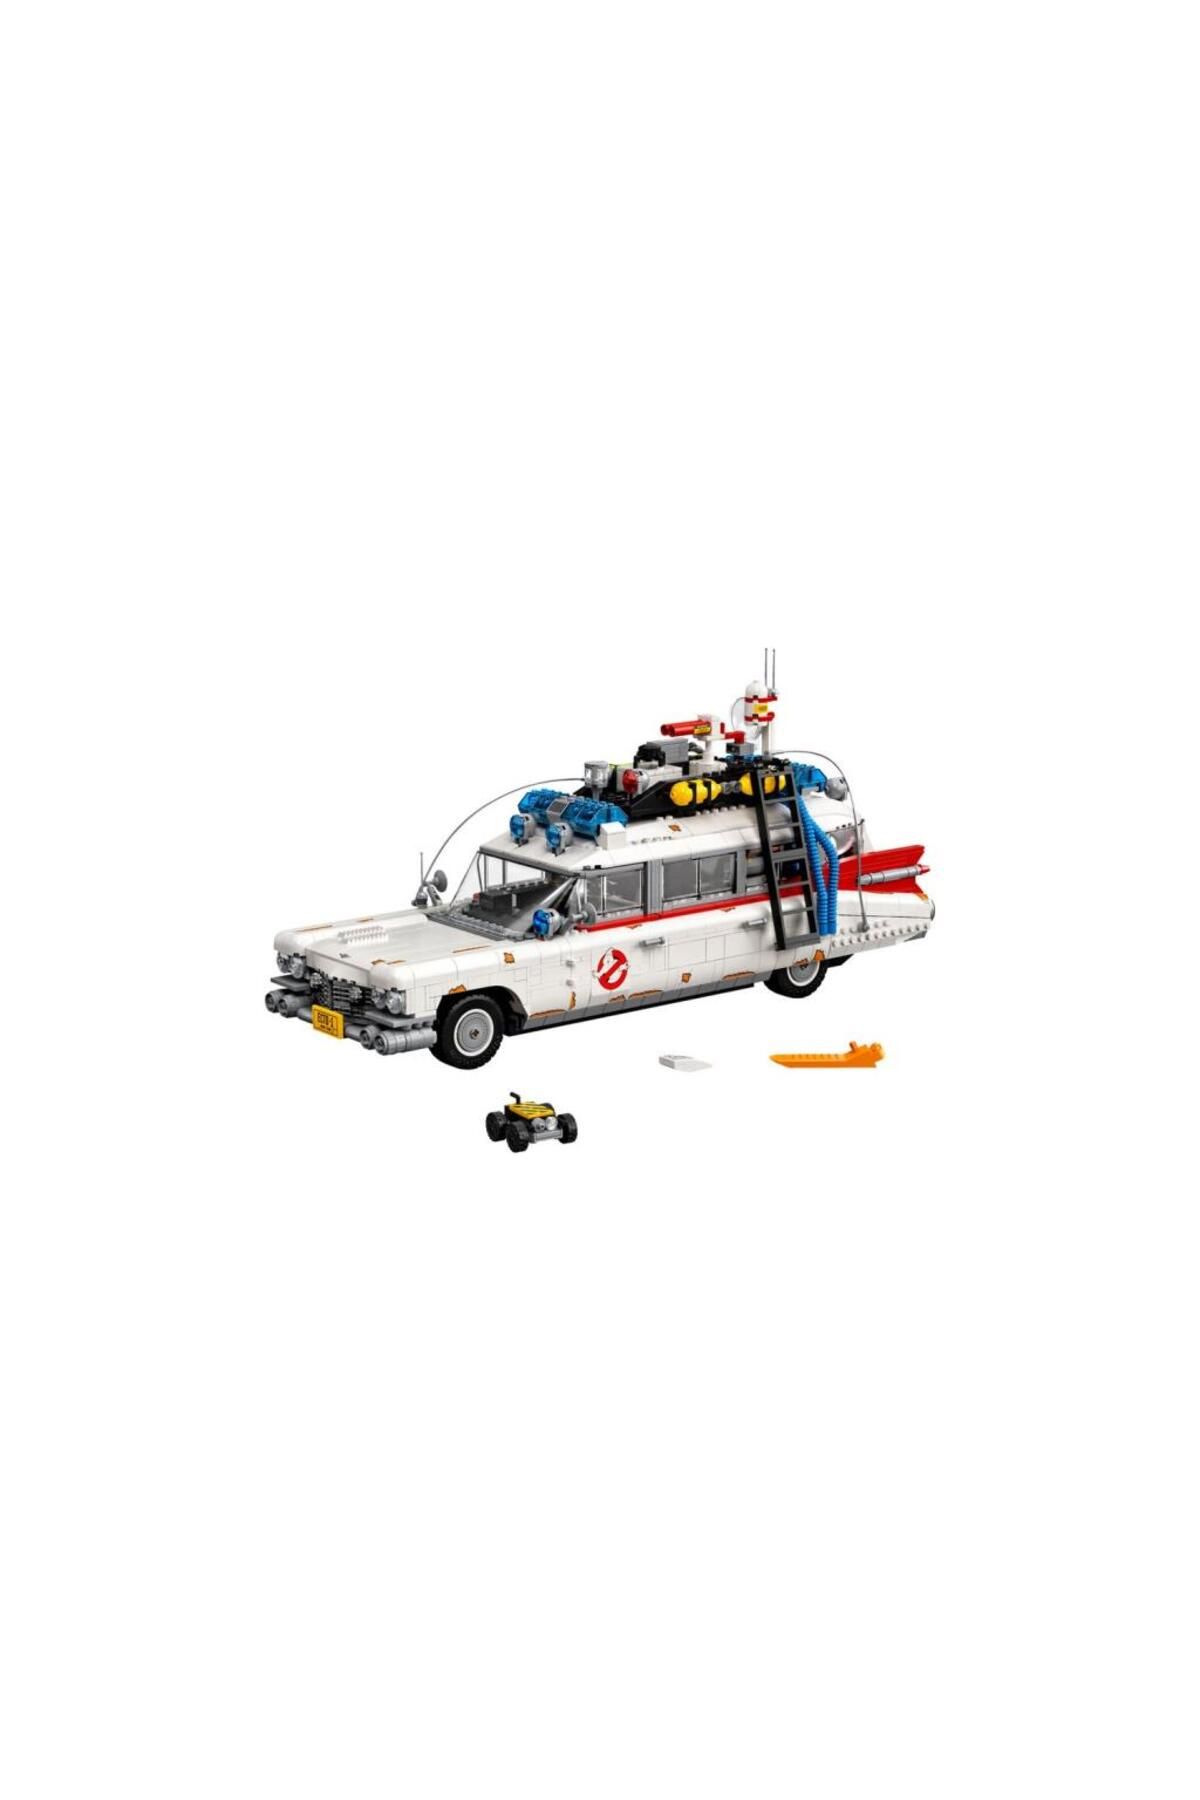 LEGO Creator Expert 10274 Ghostbusters Ecto-1